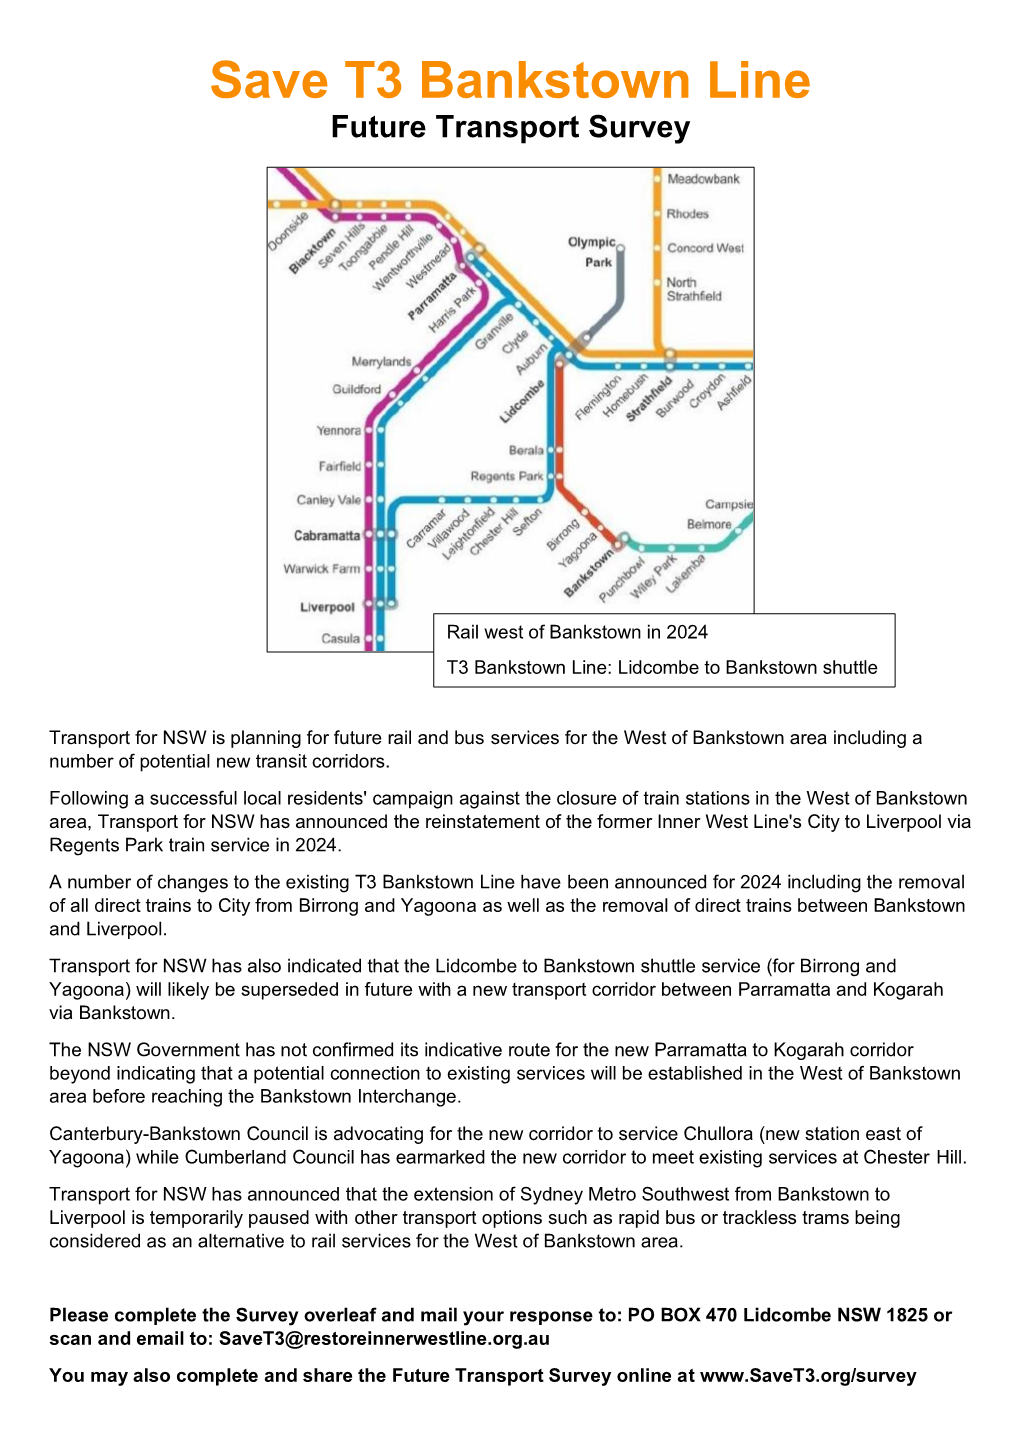 Save T3 Bankstown Line Future Transport Survey